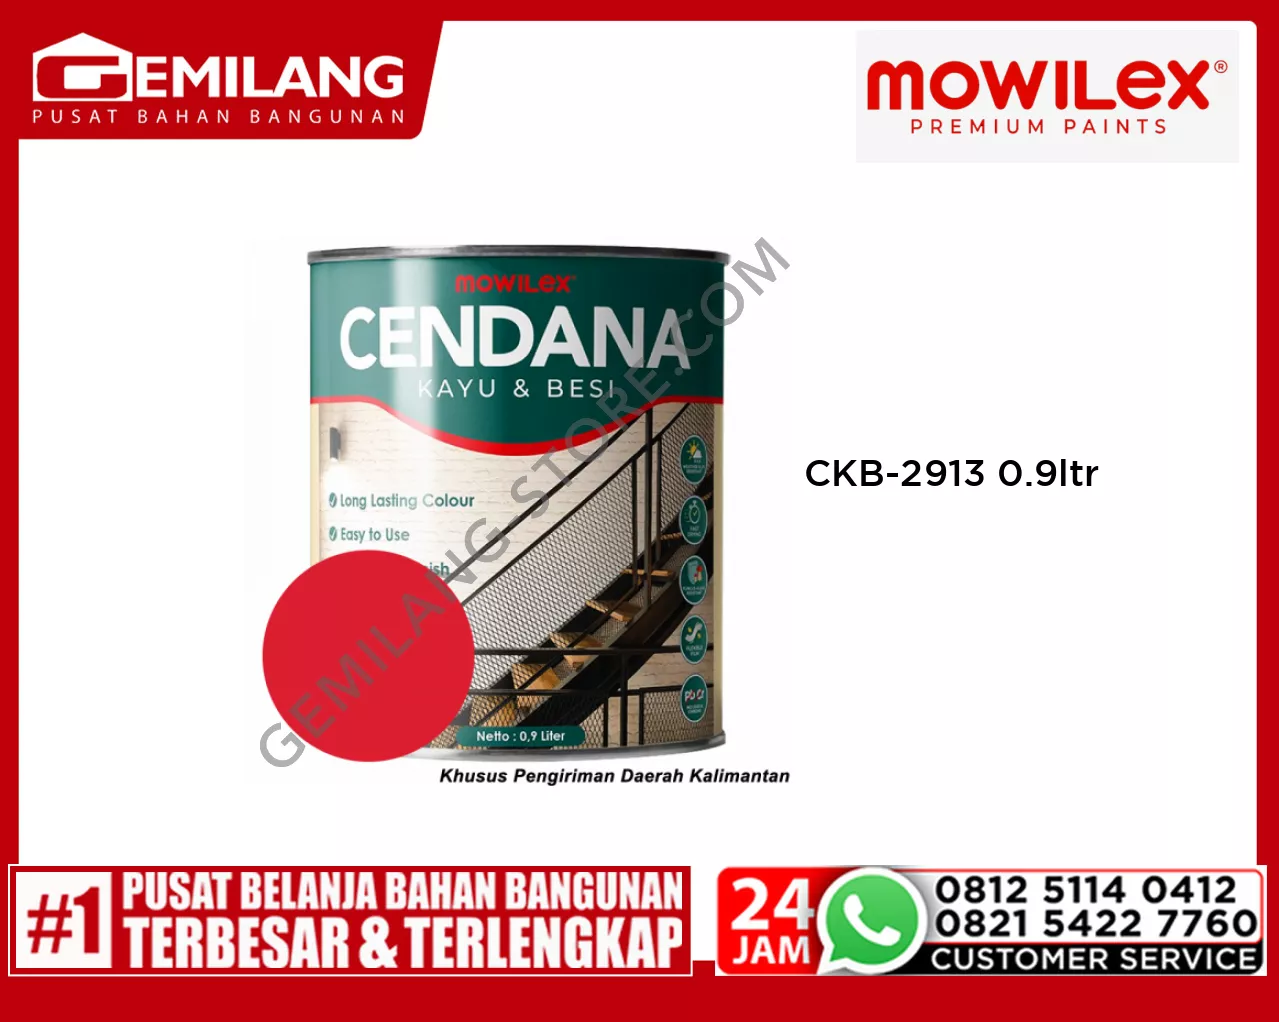 MOWILEX CENDANA KAYU & BESI CKB-2913 RED SIGNAL 0.9ltr